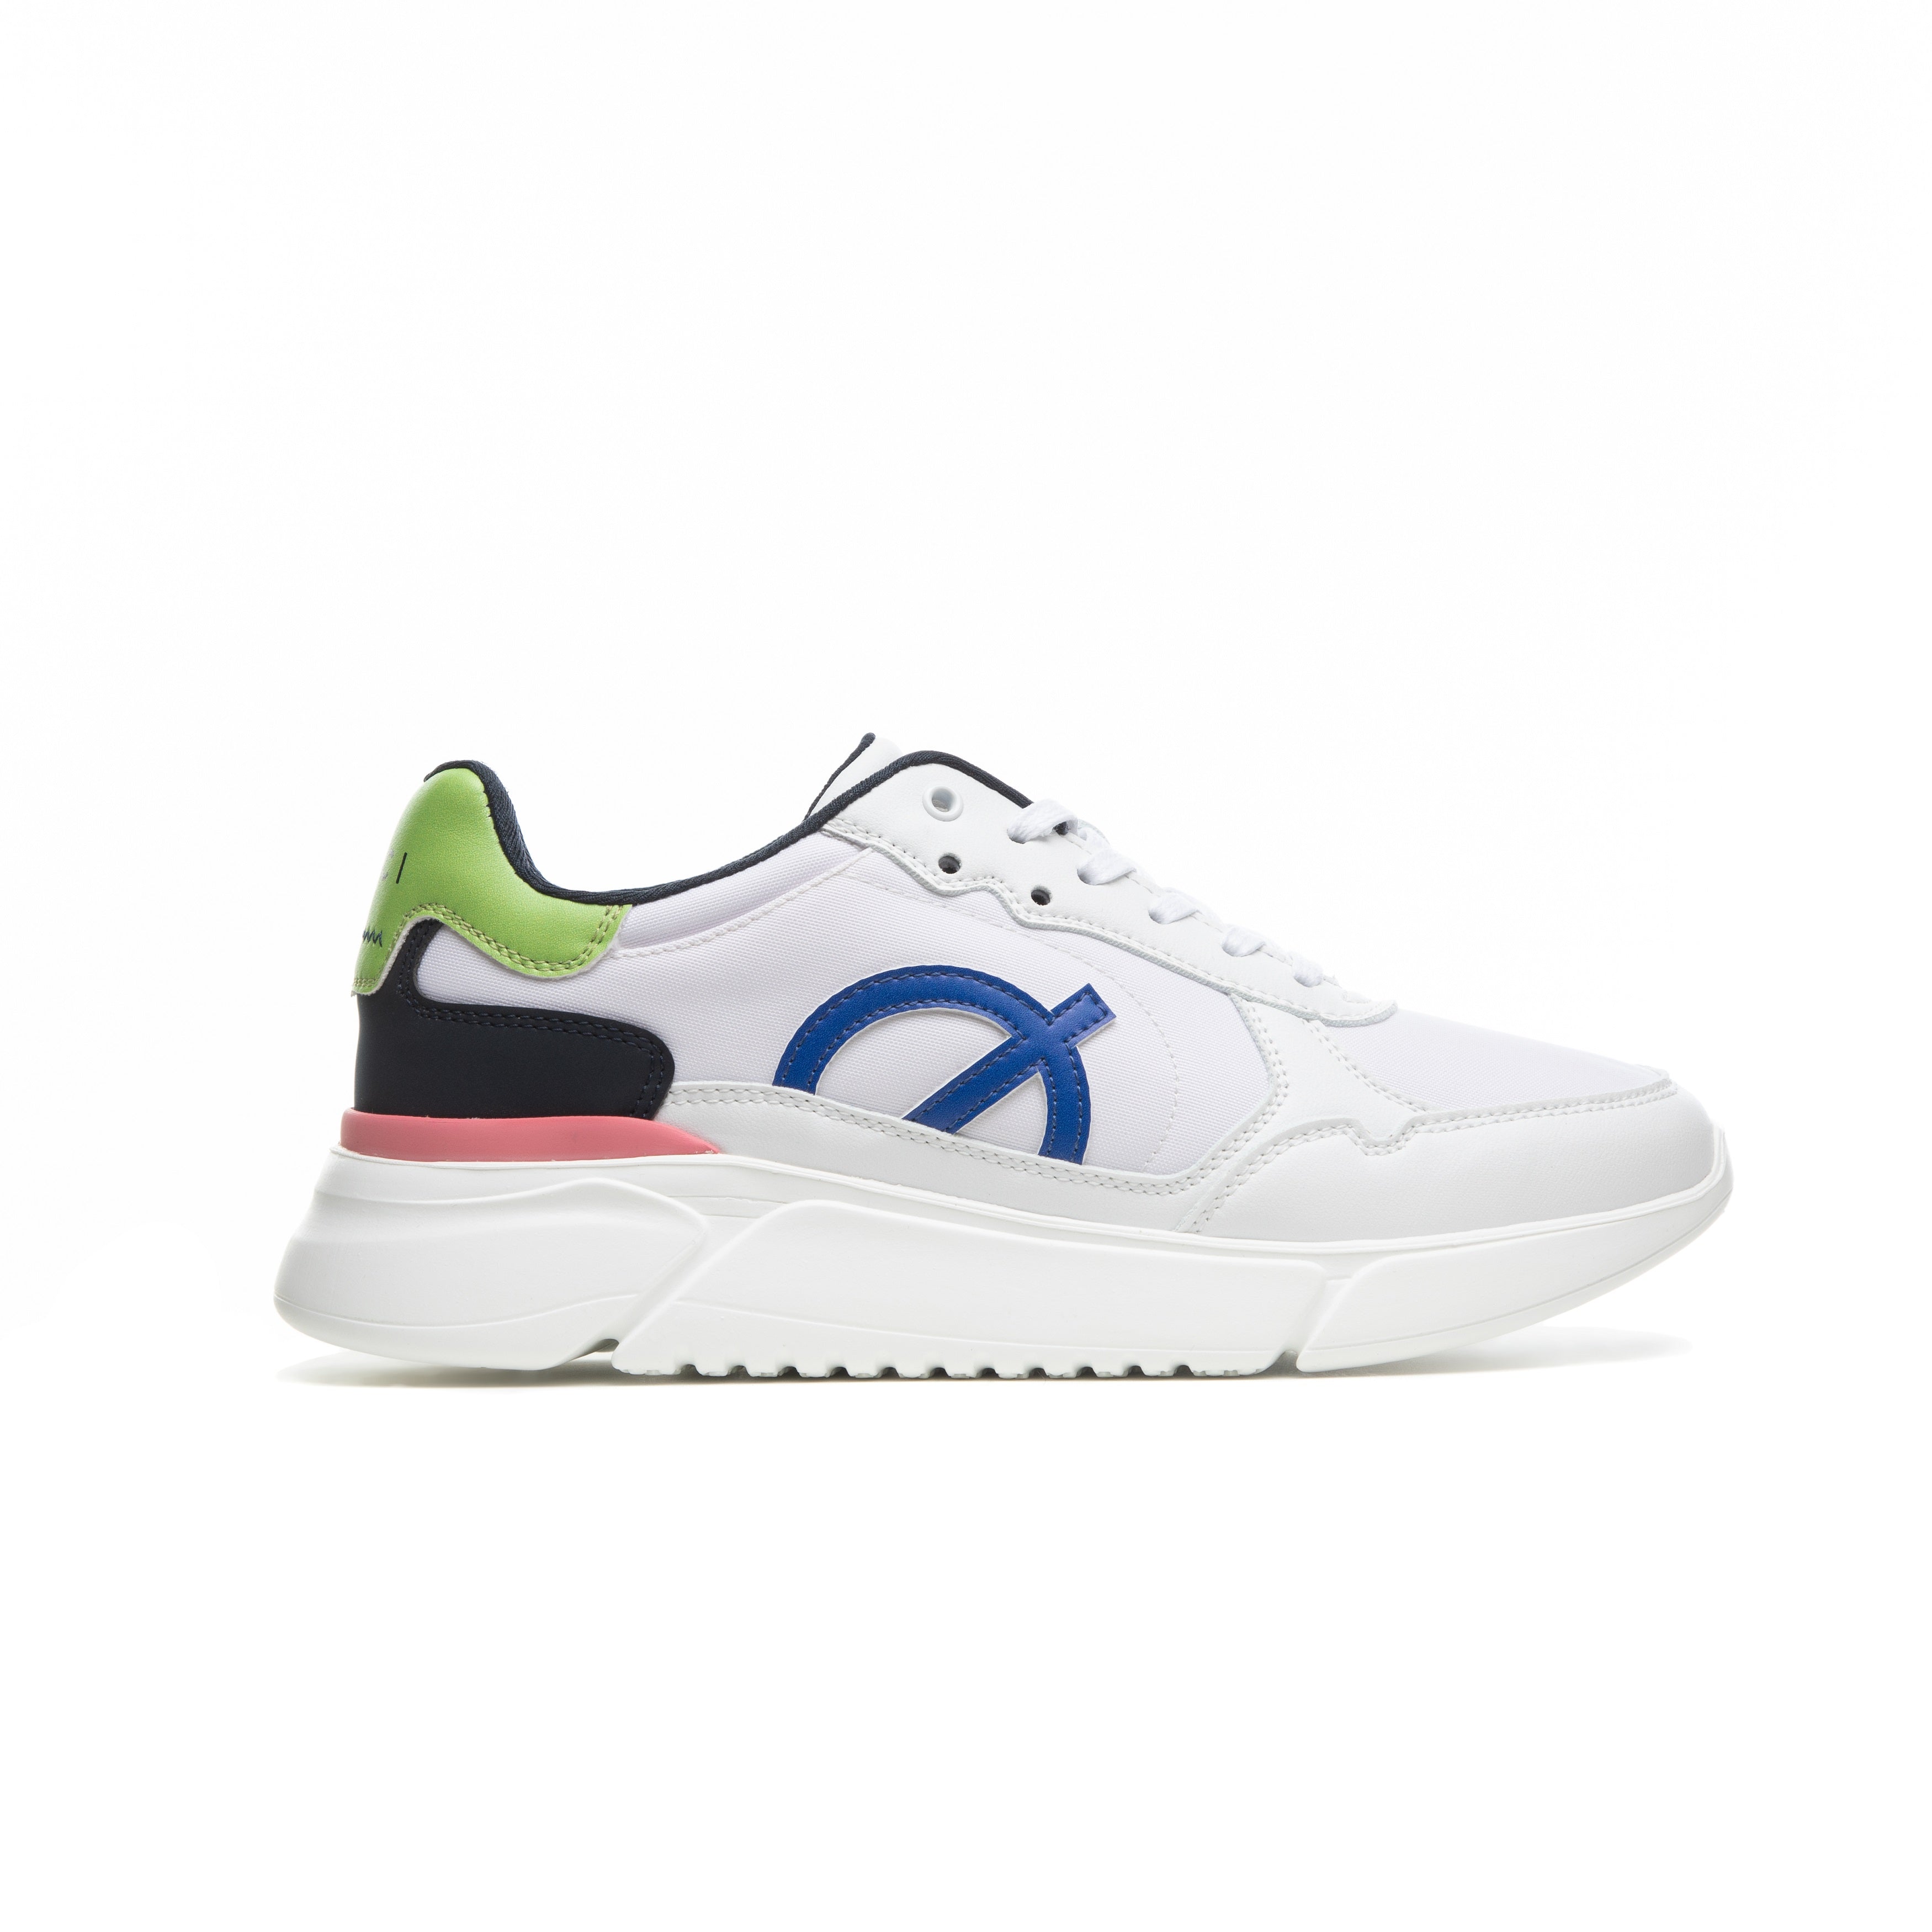 Loci Echo Sneaker White/Blue/Green 3.5 